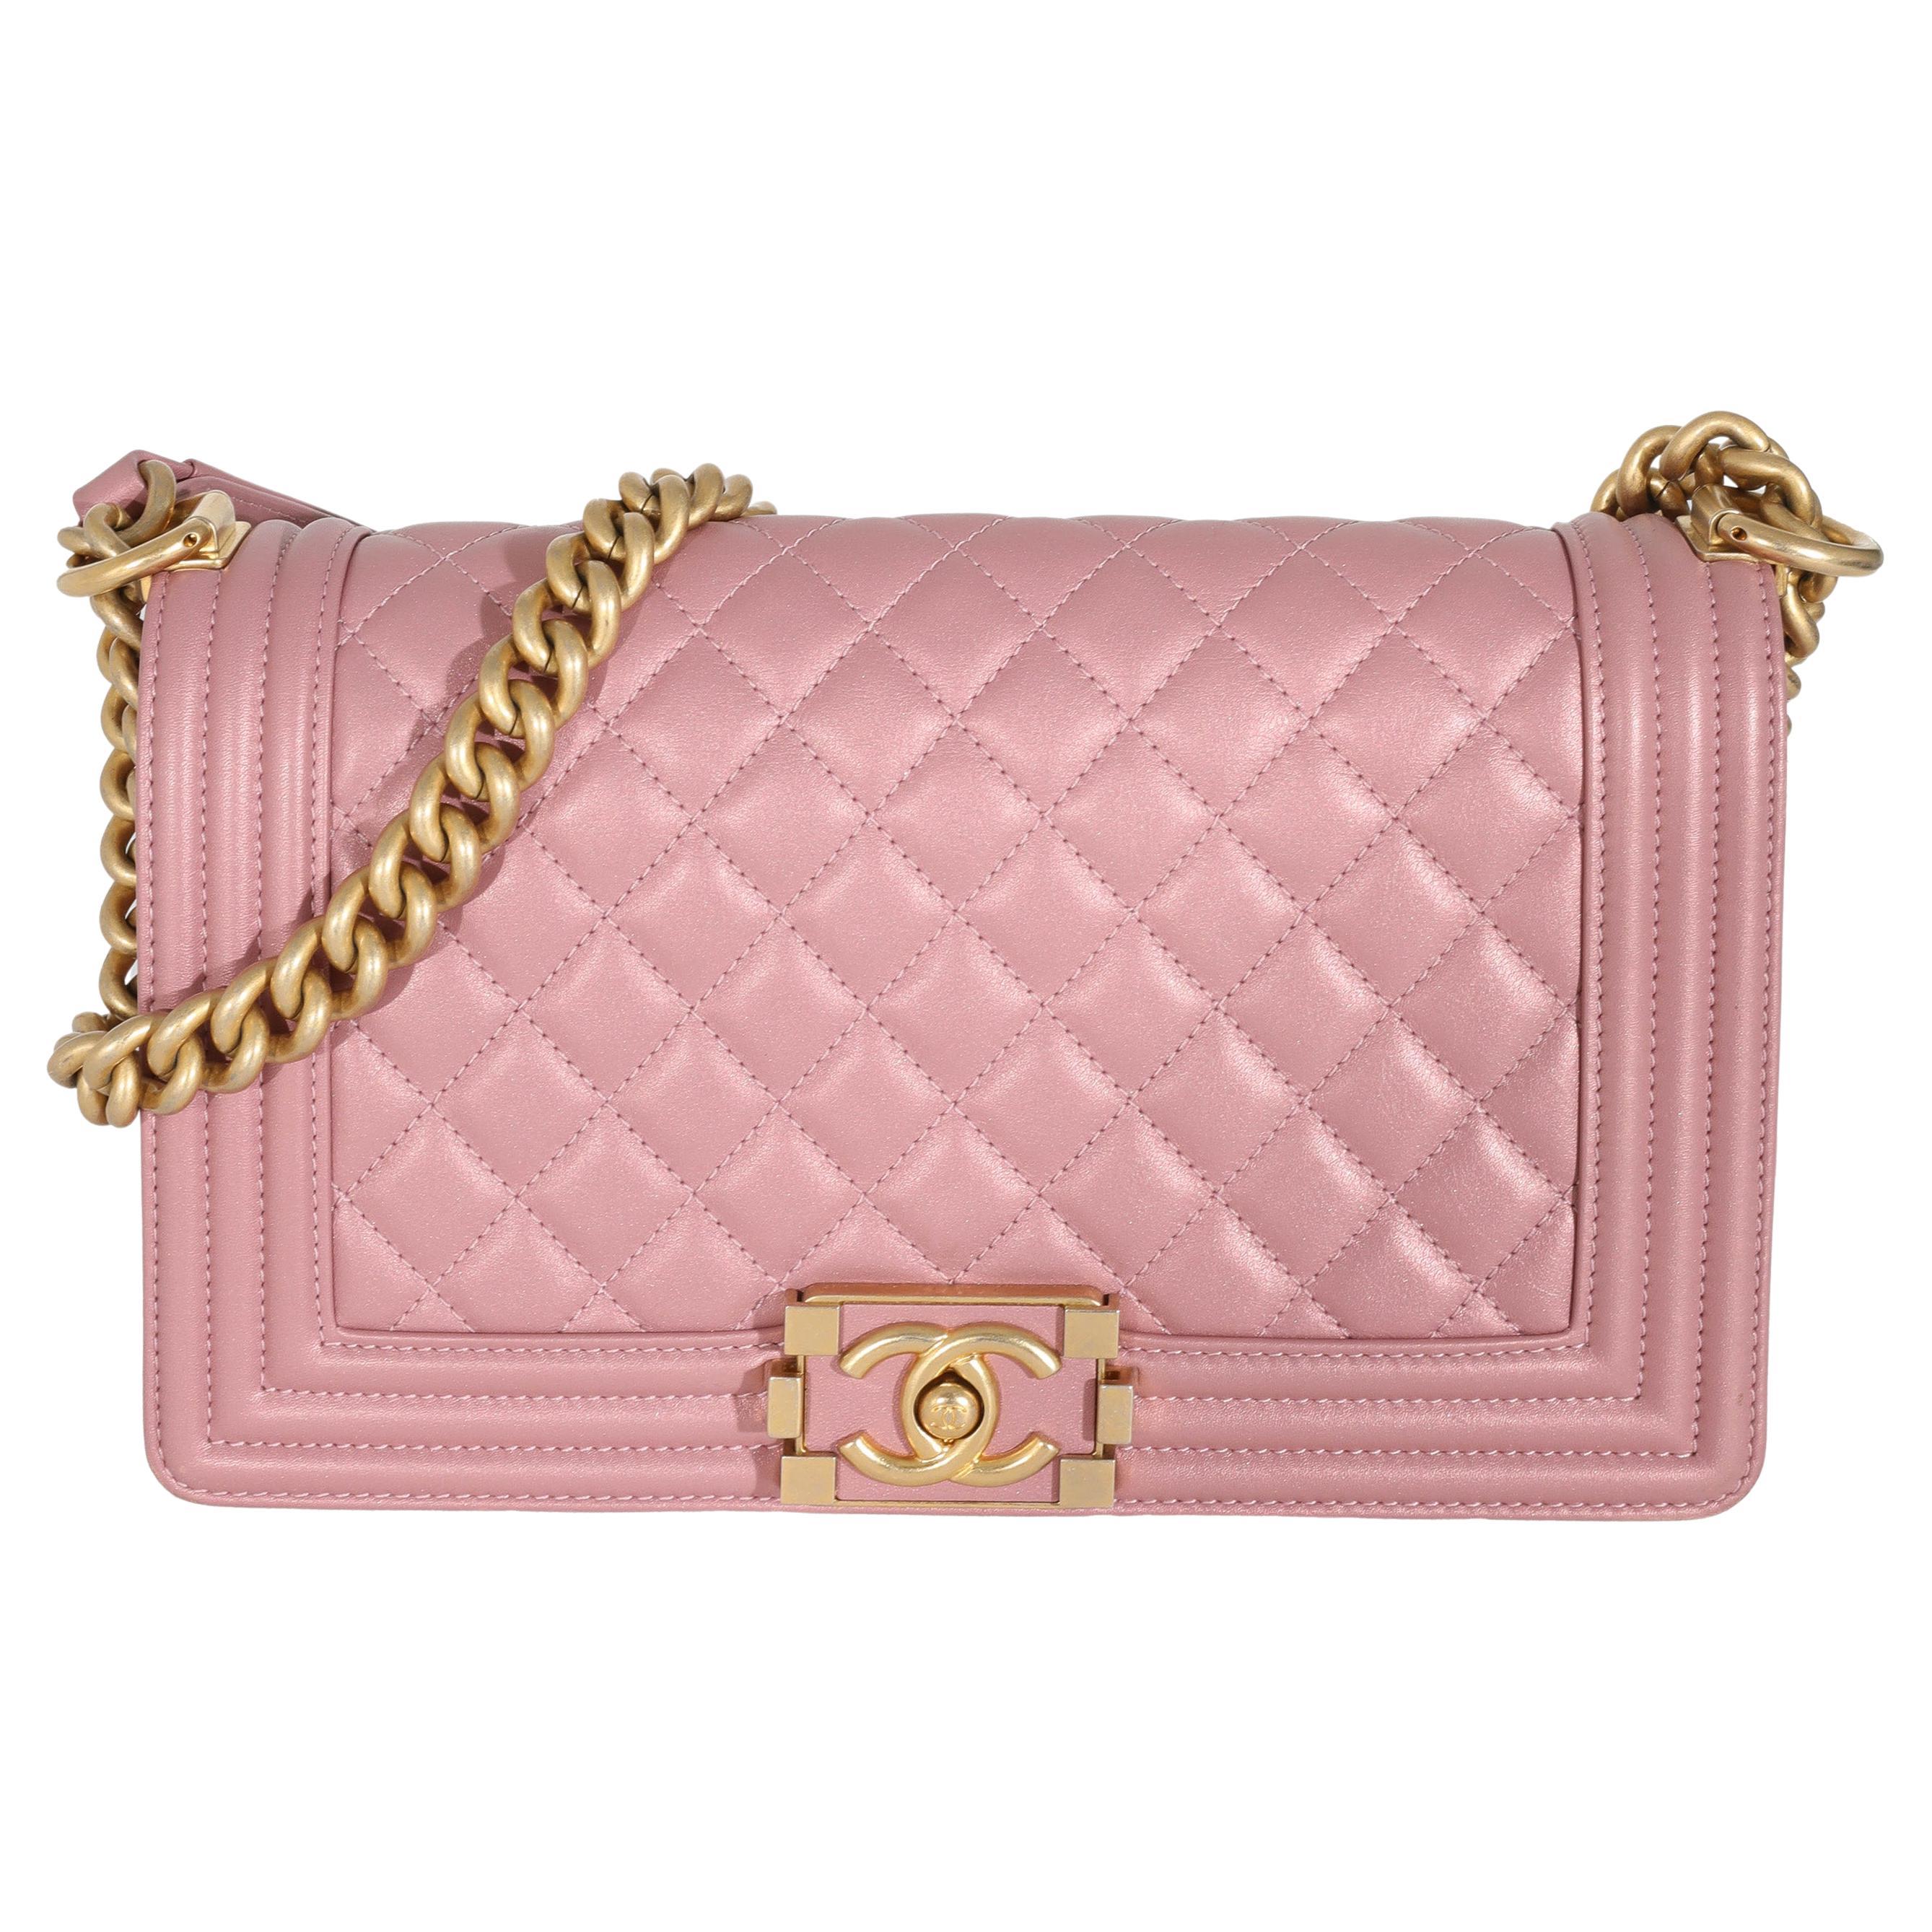 Chanel Metallic Pink - 20 For Sale on 1stDibs  chanel metallic pink bag,  pink metallic chanel bag, chanel pink metallic bag